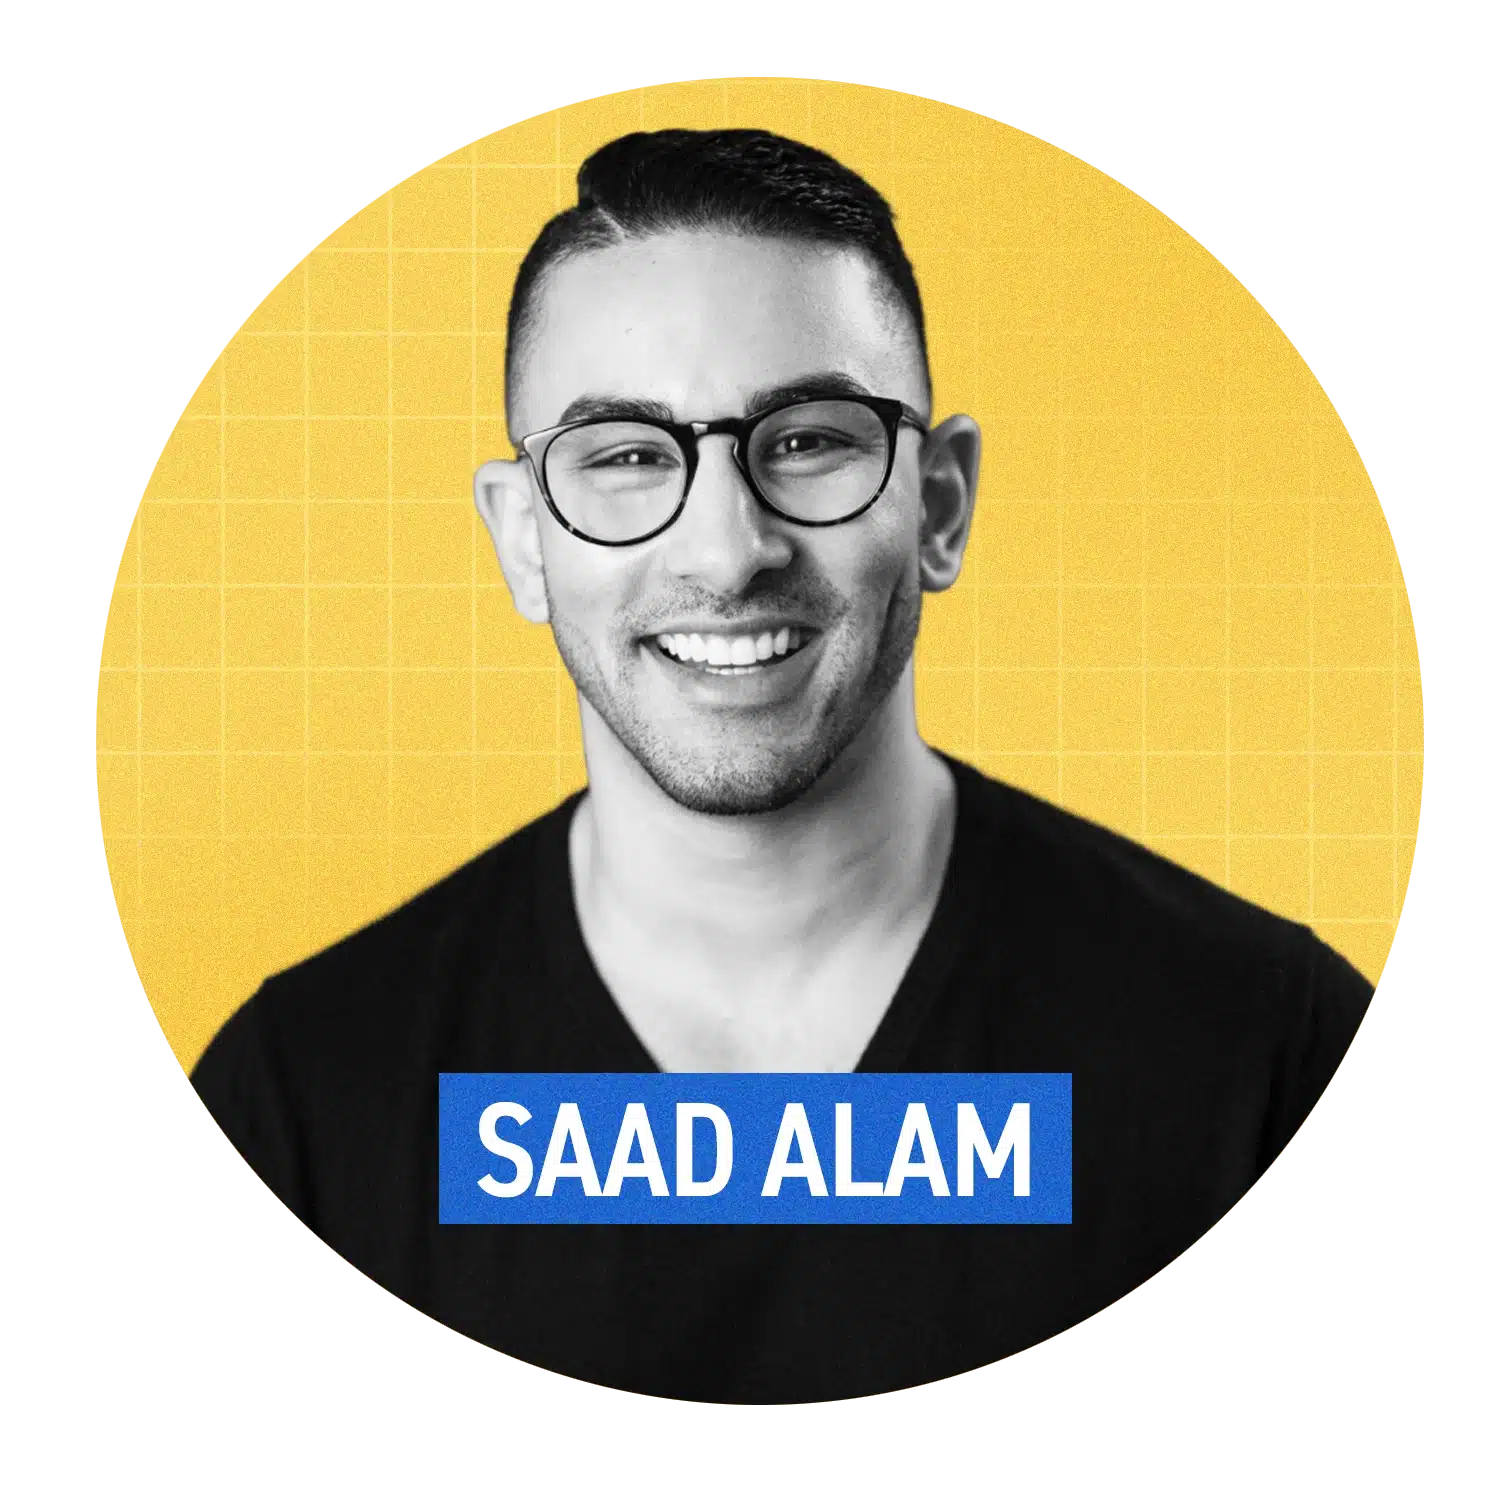 A photo of Saad Alam